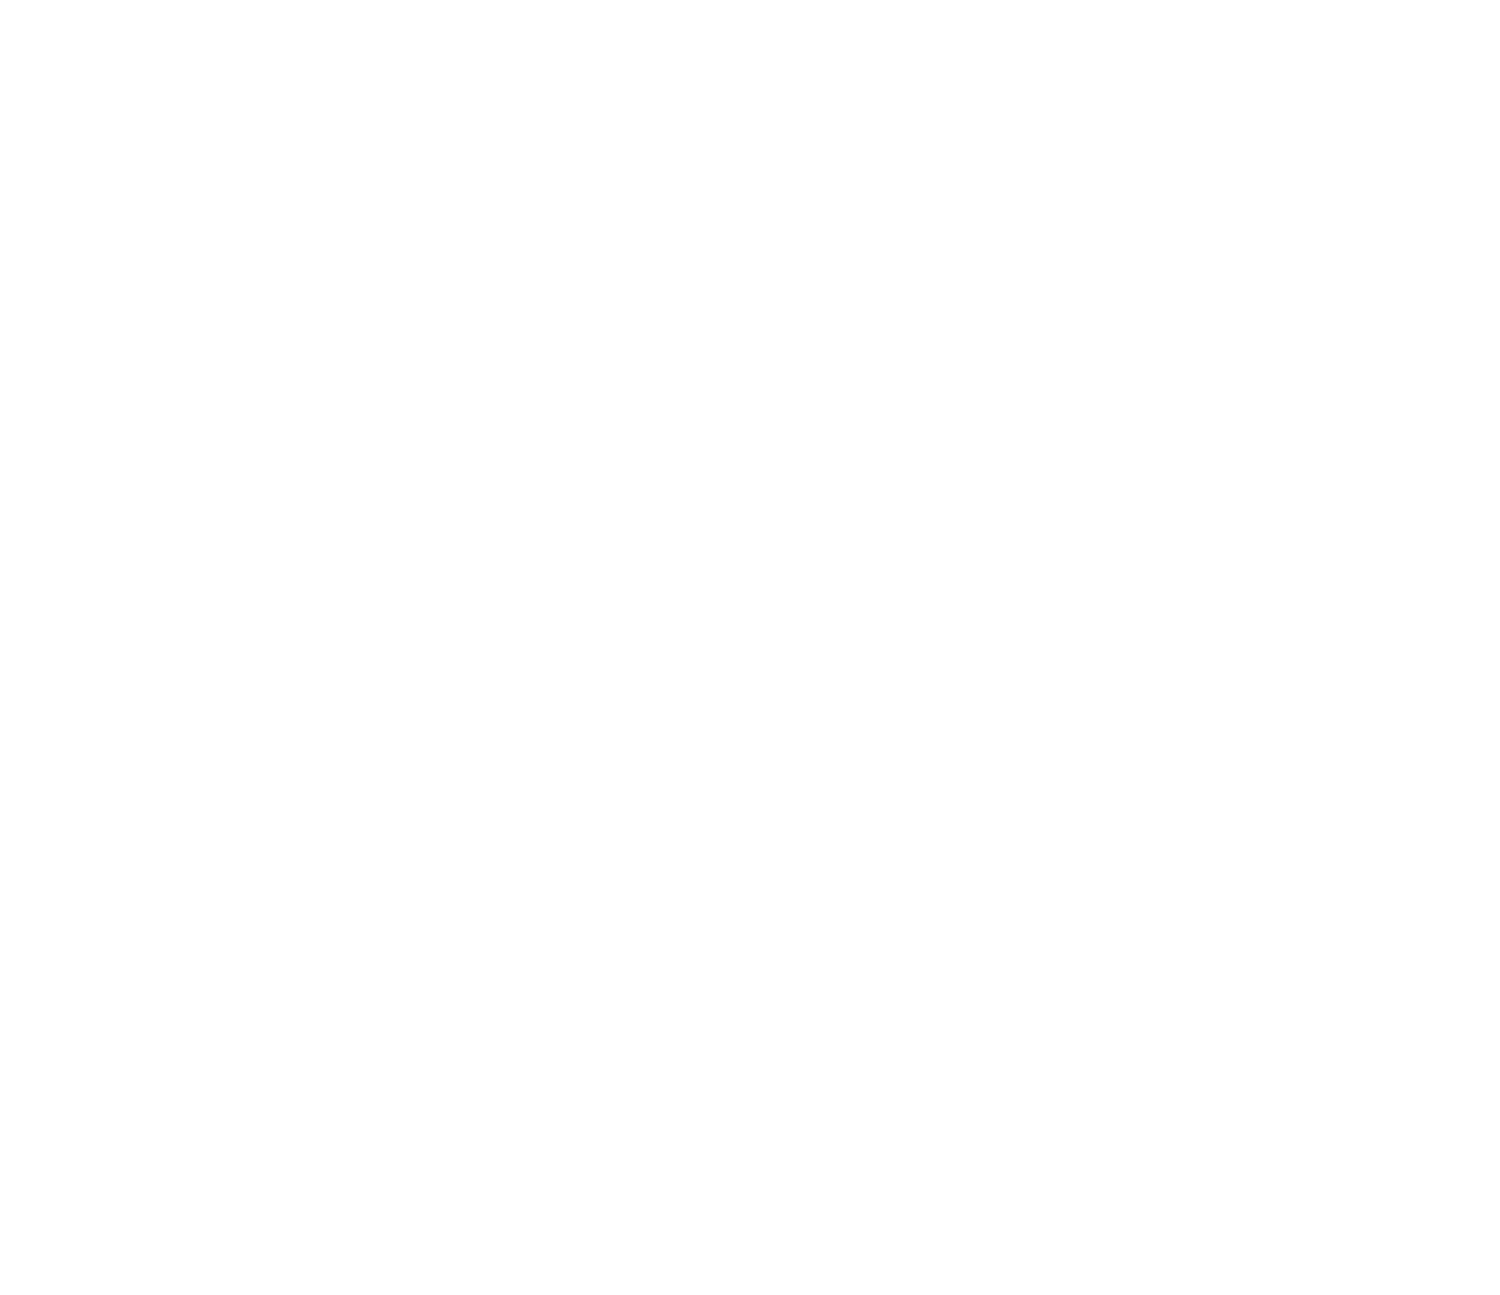 Olive Ewe Productions